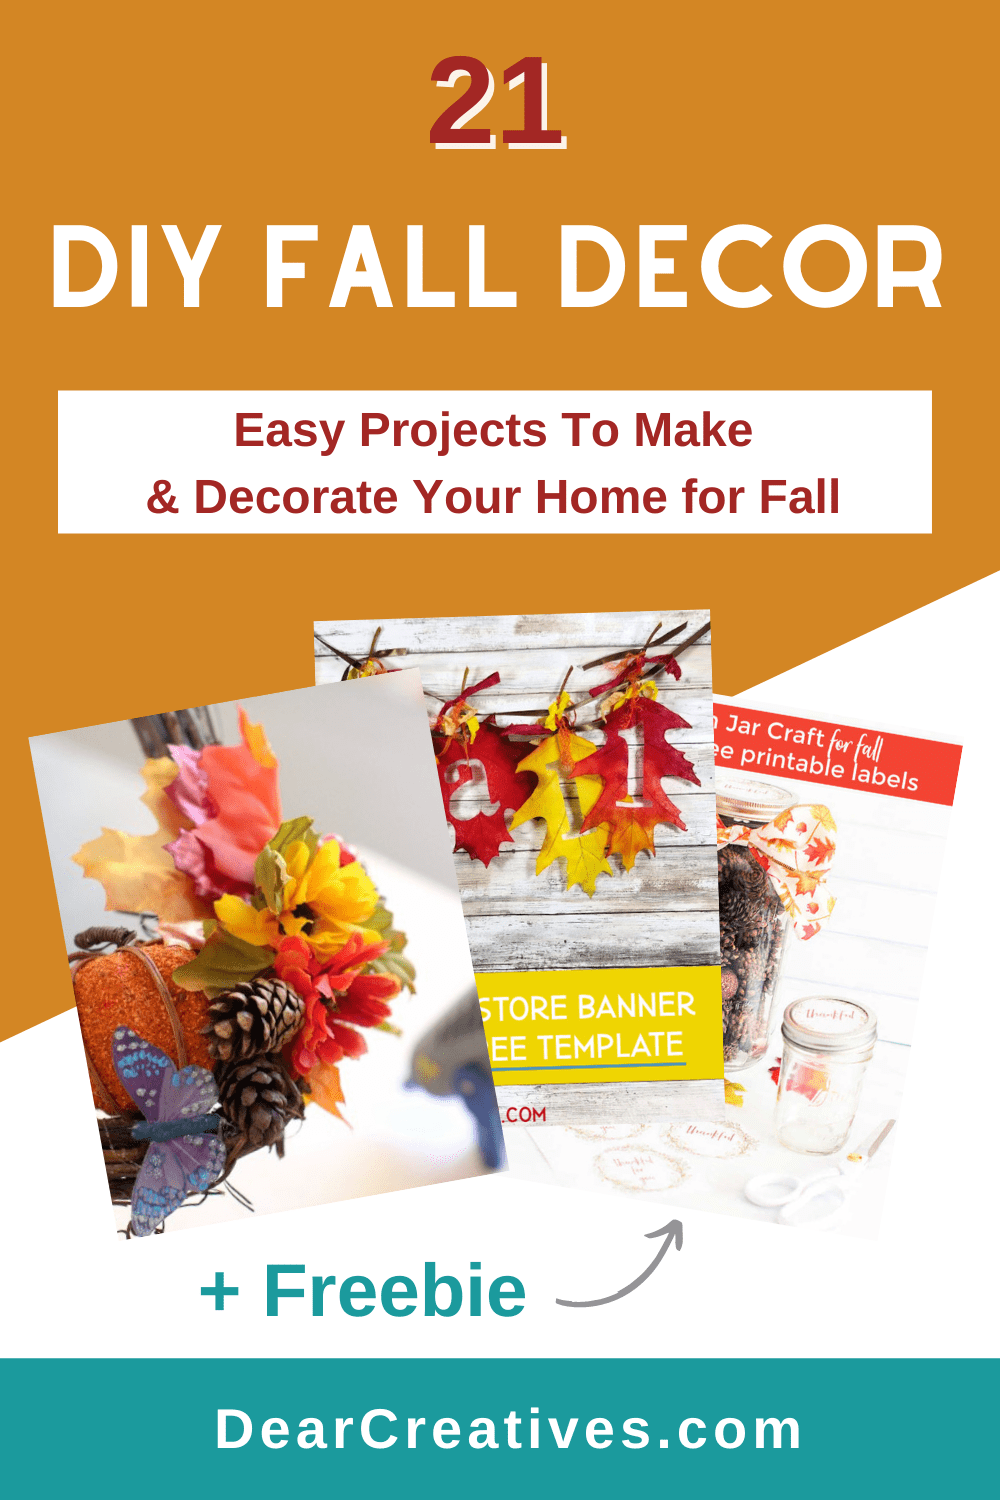 21 Diy Fall Decor Ideas To Make For Your Home Dear Creatives